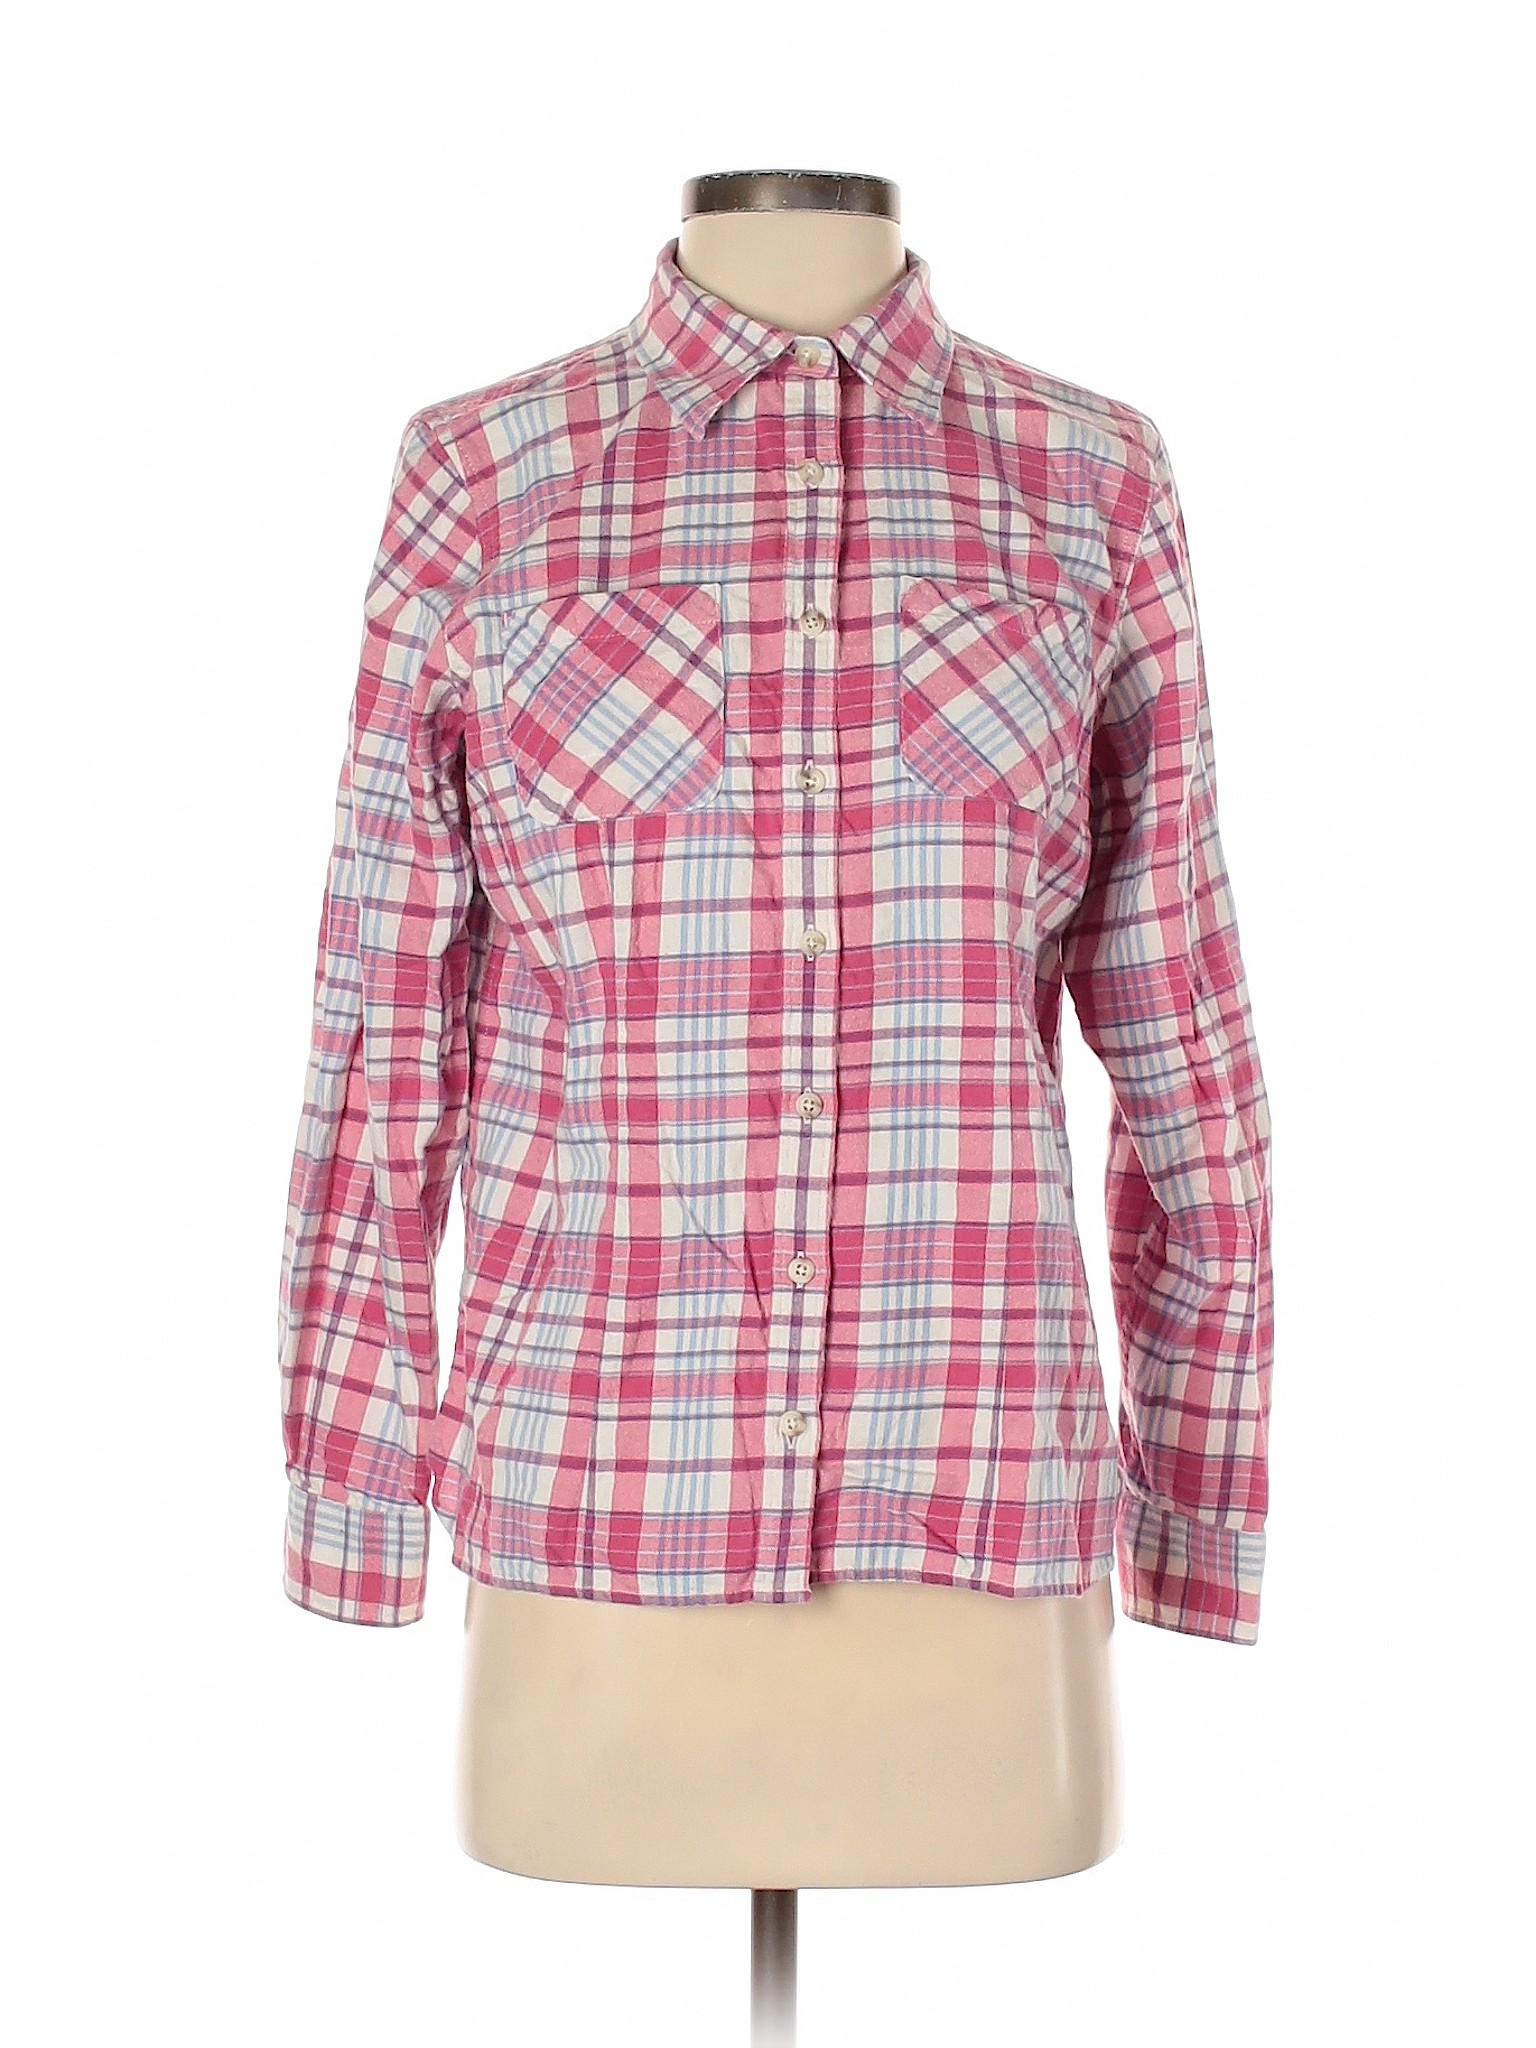 Details about L.L.Bean Women Pink Long Sleeve Button Down Shirt Sm Petite